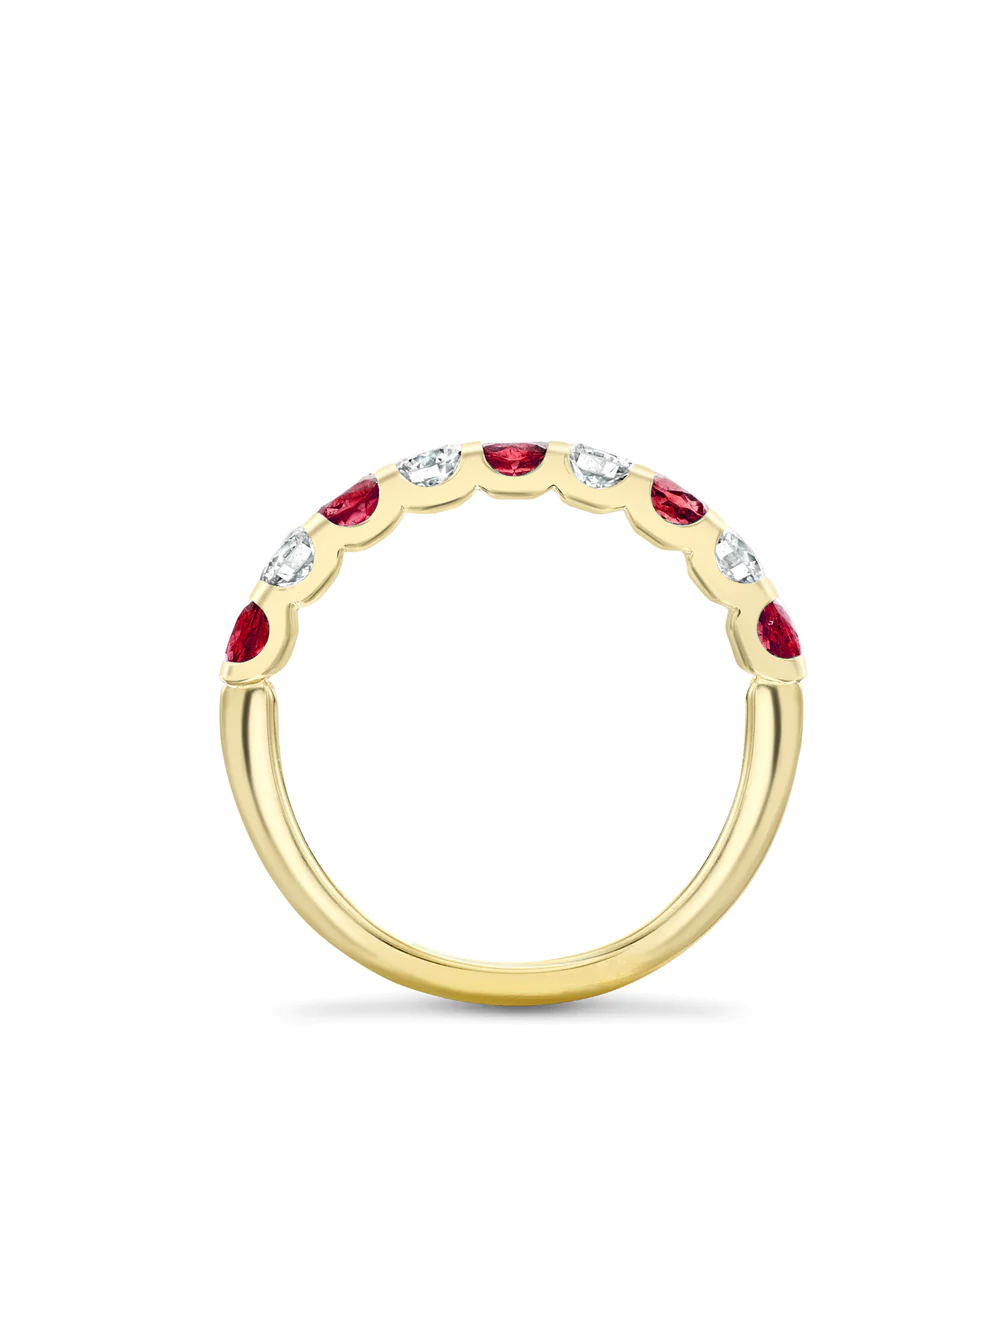 Classic Ruby and Diamond Yellow Gold Eternity Ring - Robert Anthony Jewellers, Edinburgh